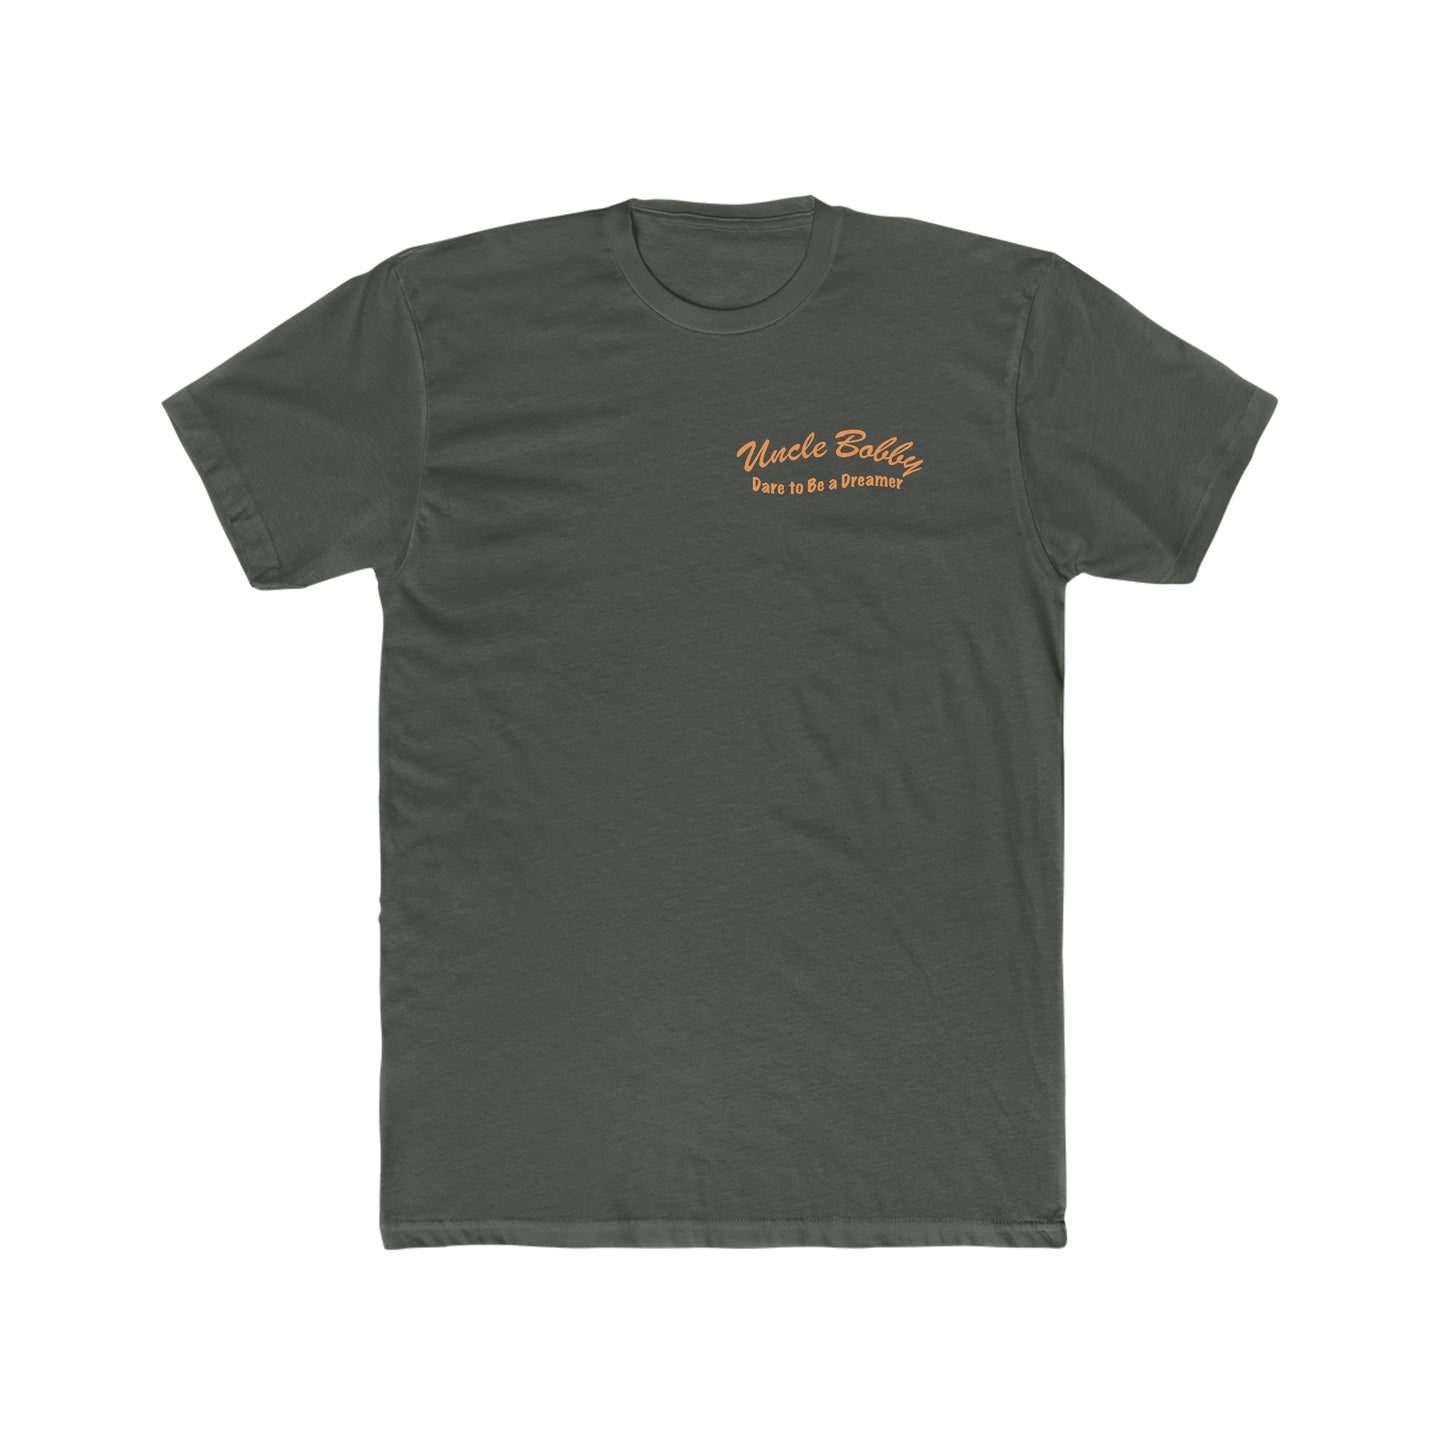 Dreamer T-Shirt: Solar